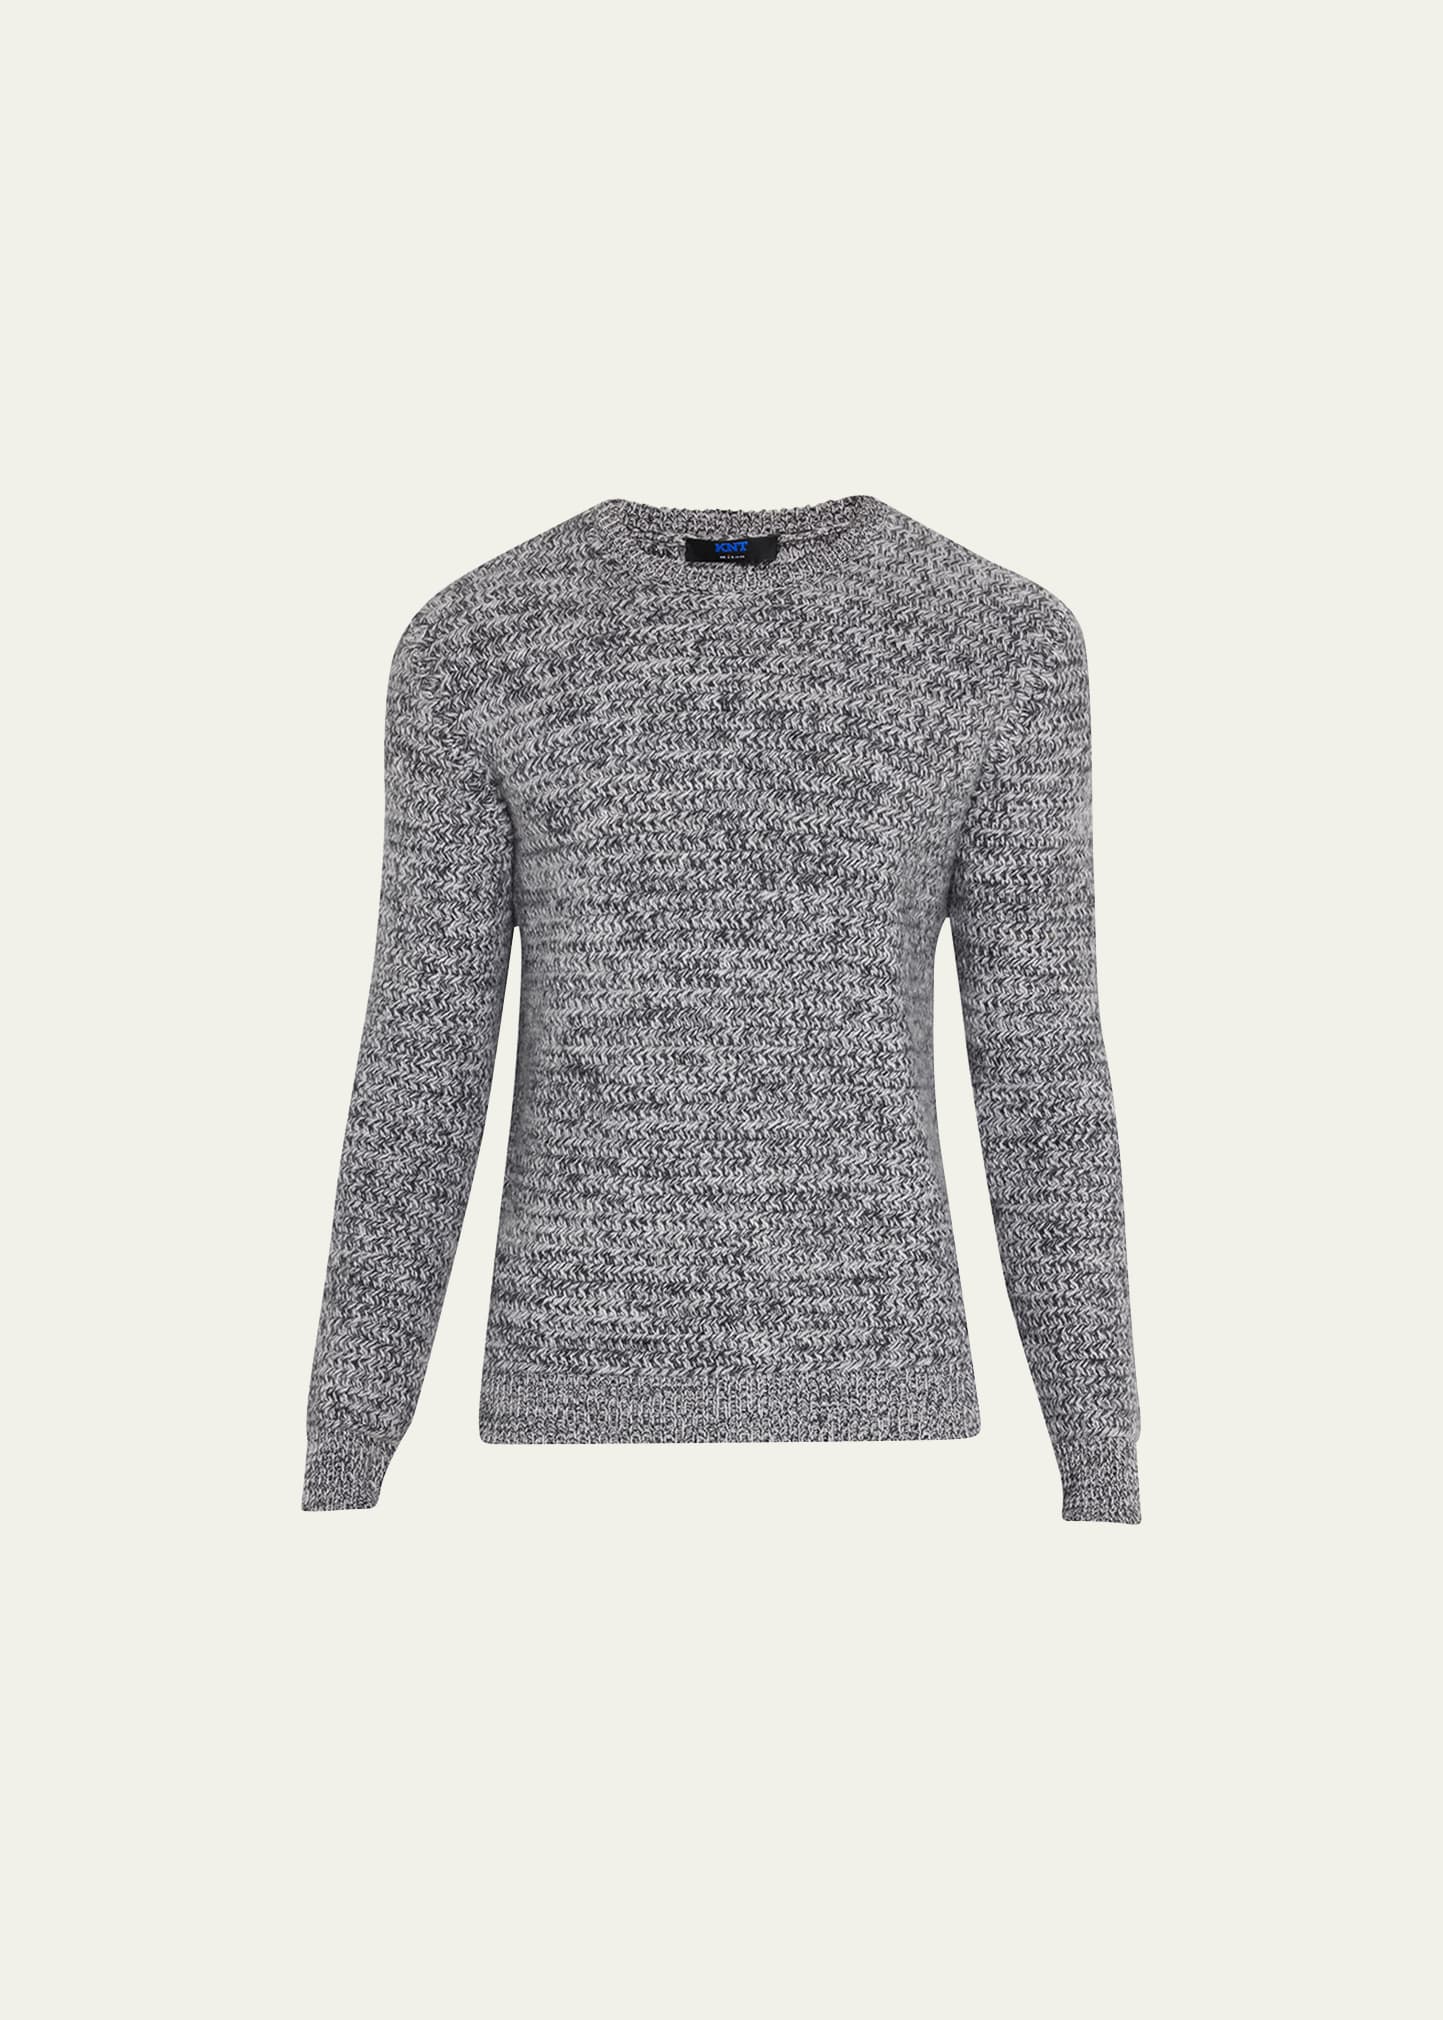 KNT Men's Wool-Cashmere Knit Crewneck Sweater